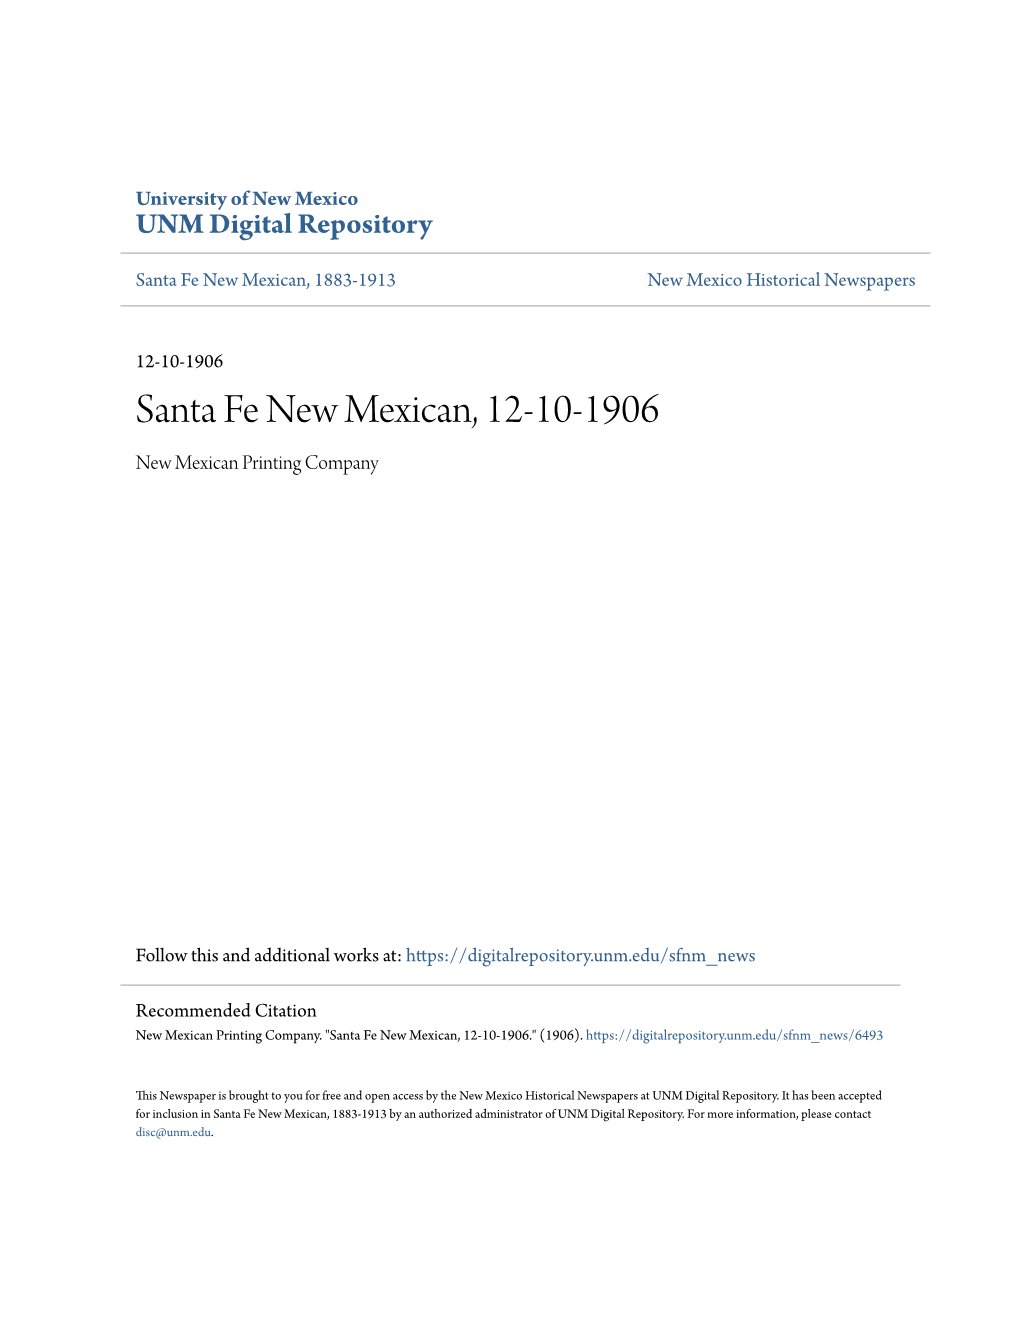 Santa Fe New Mexican, 12-10-1906 New Mexican Printing Company